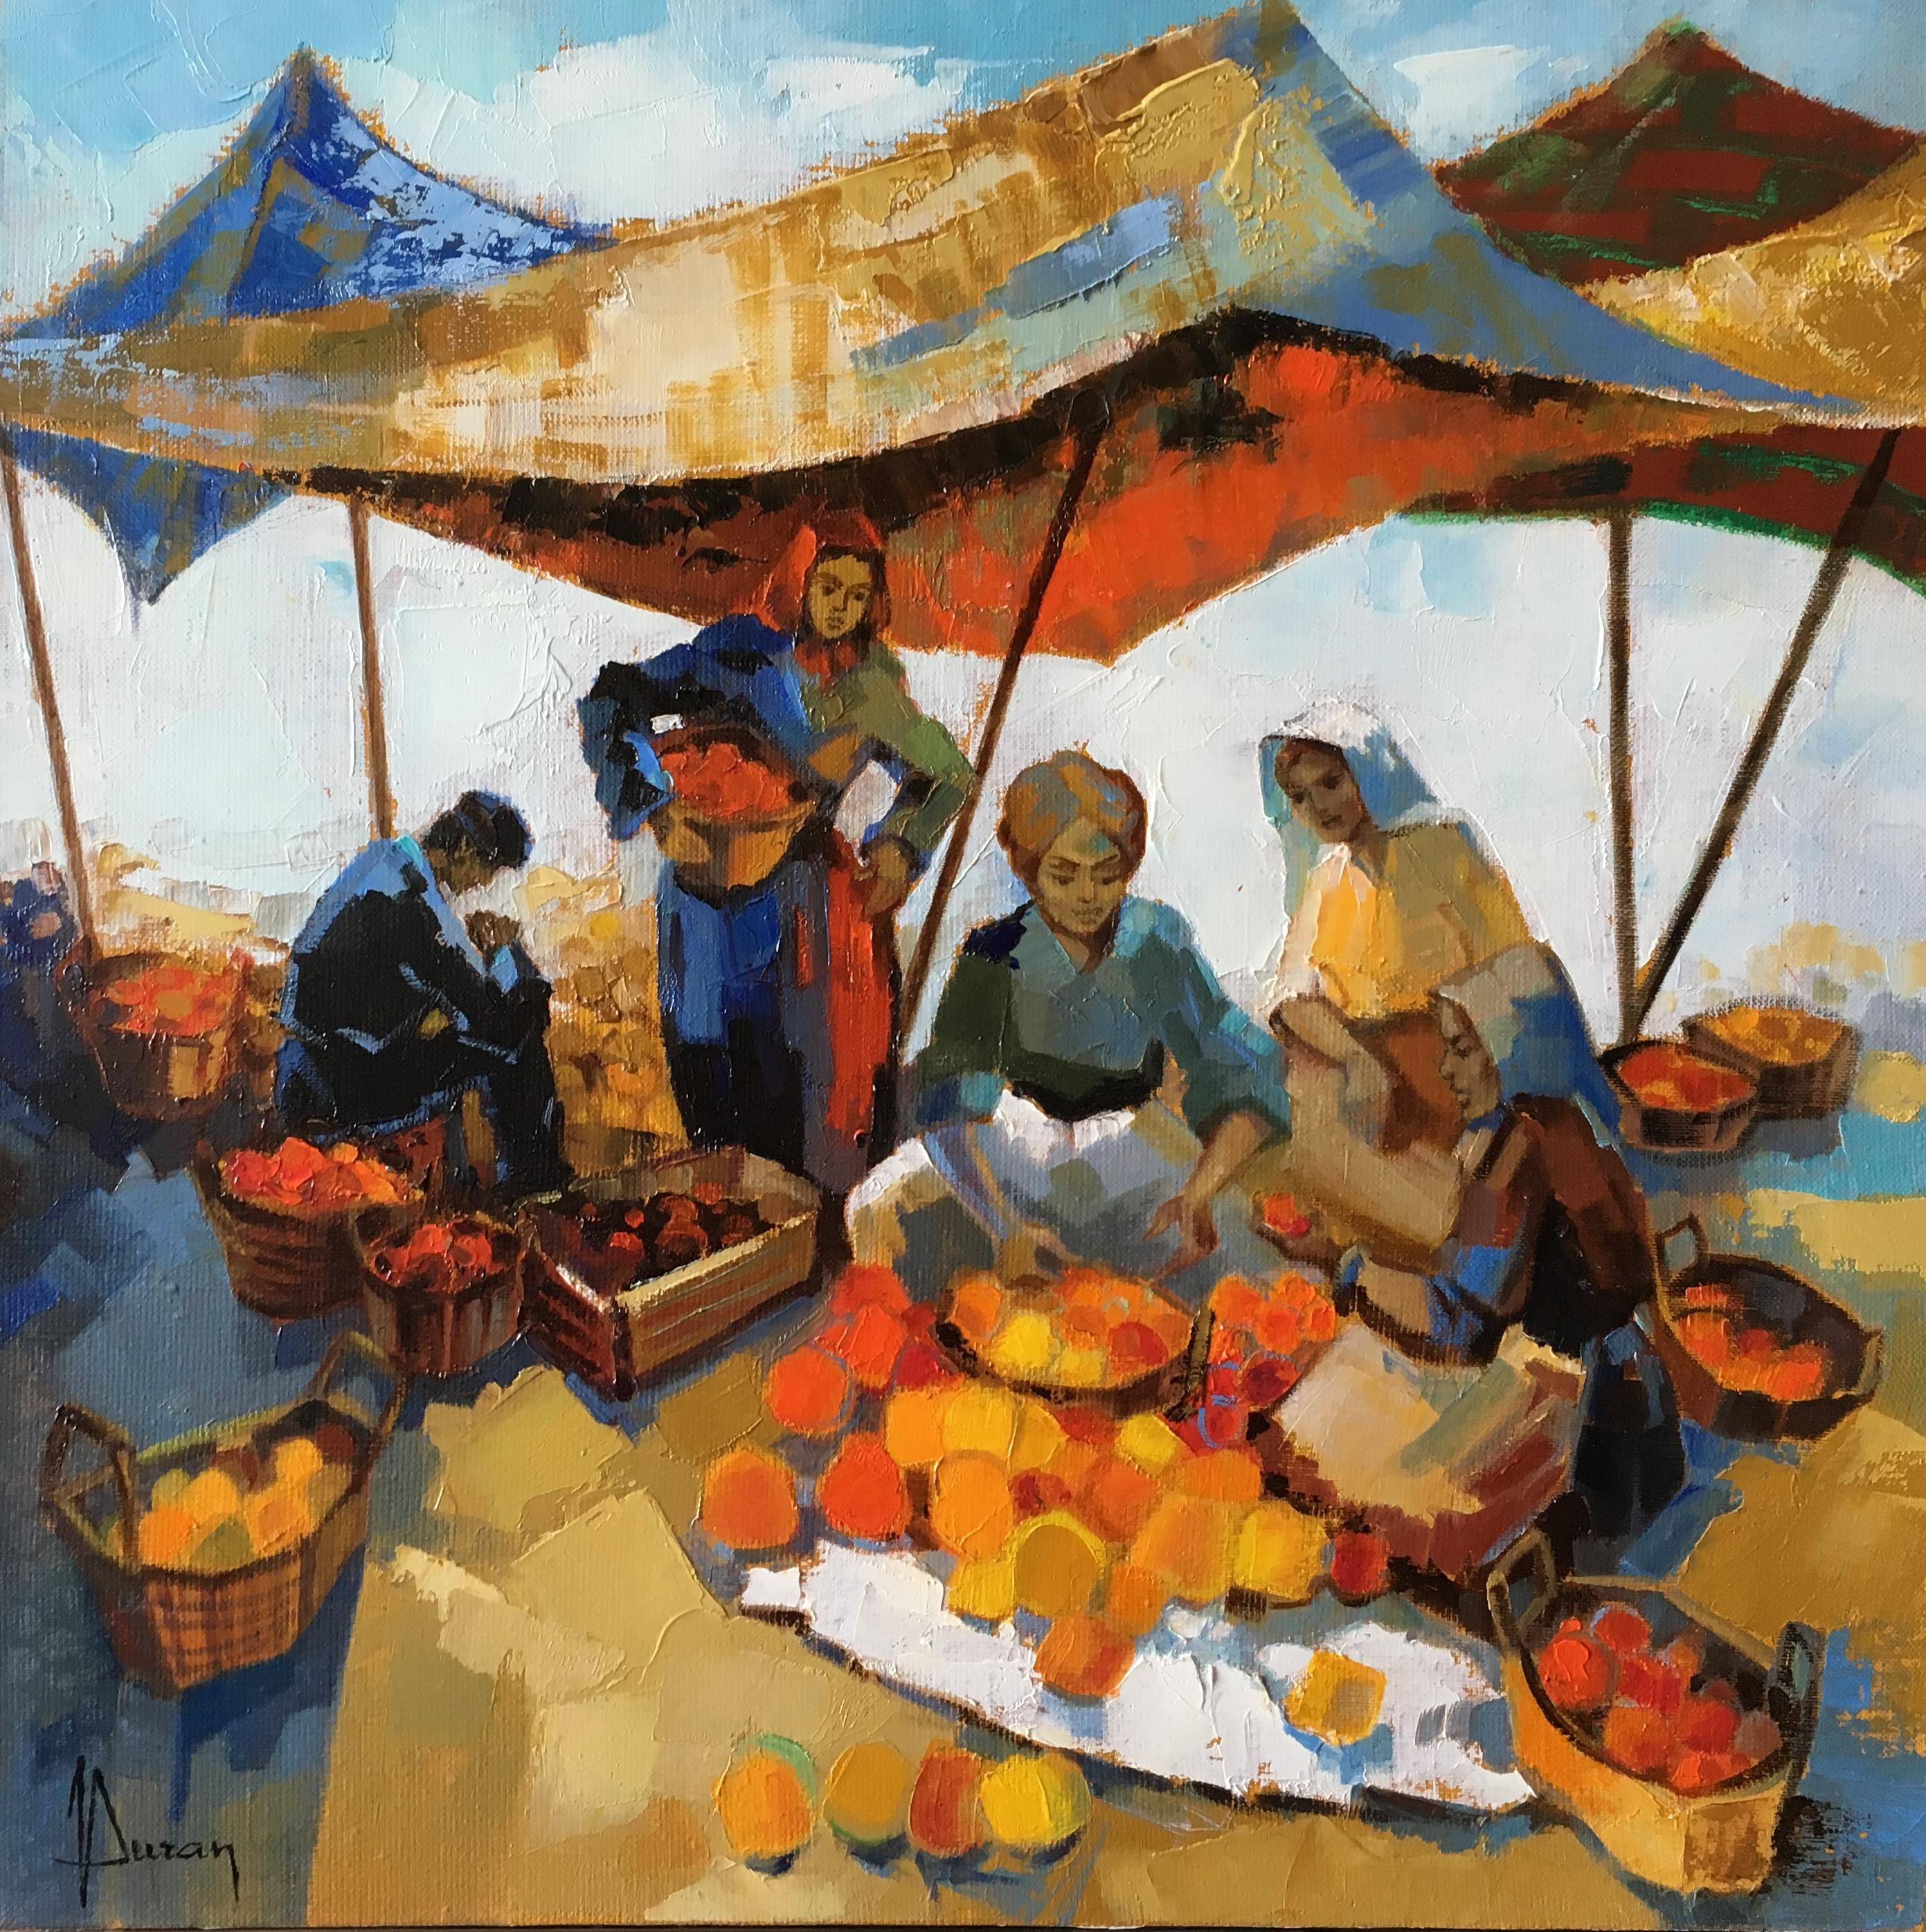 Jori Duran Figurative Painting - "Citrus fruits market" 